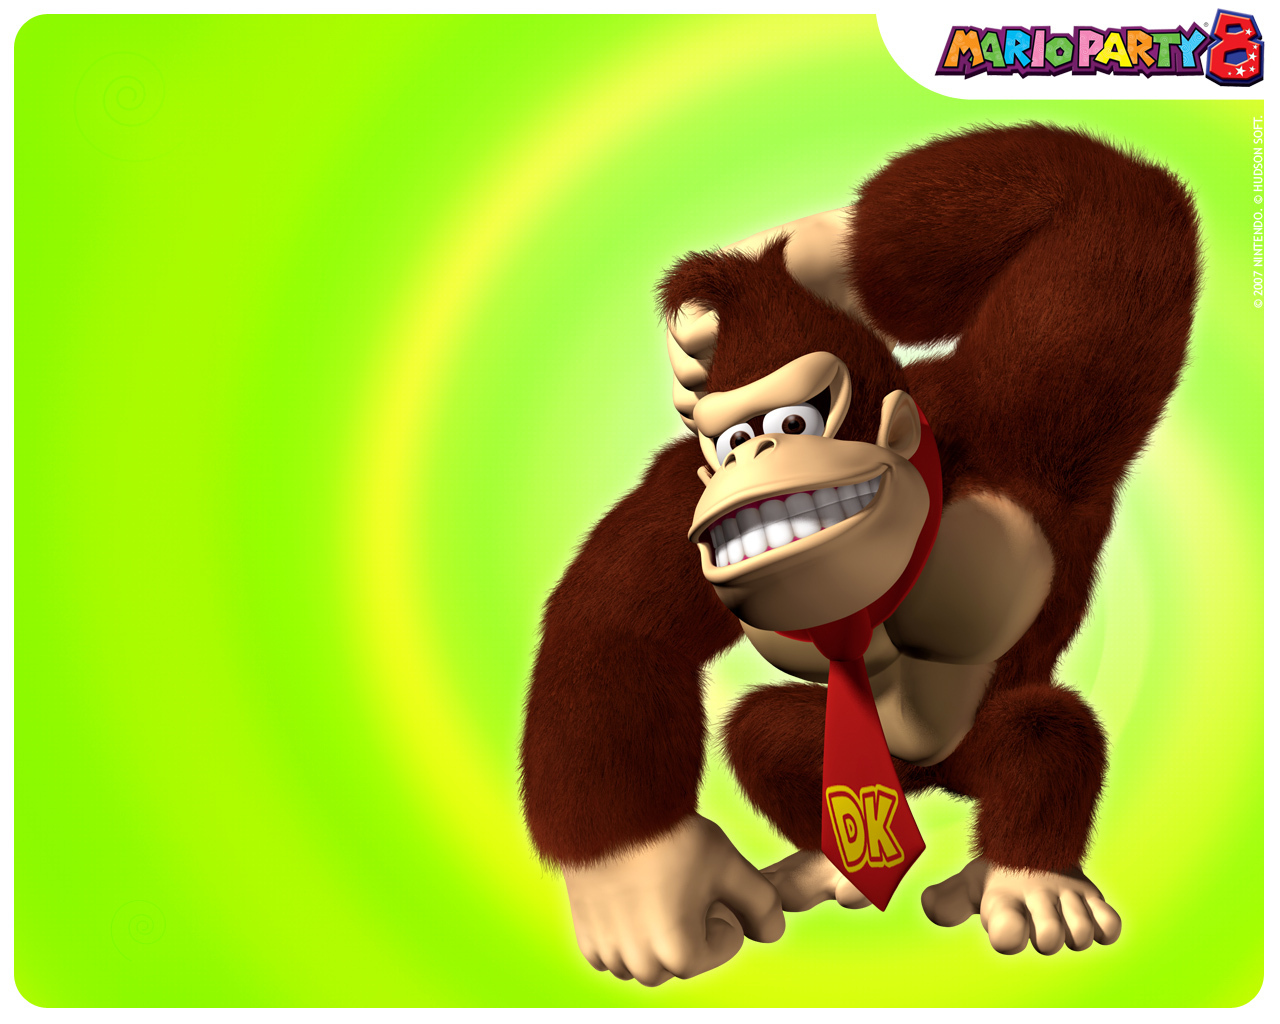 Mario Party 8: DK - Donkey Kong Wallpaper (5611561) - Fanpop